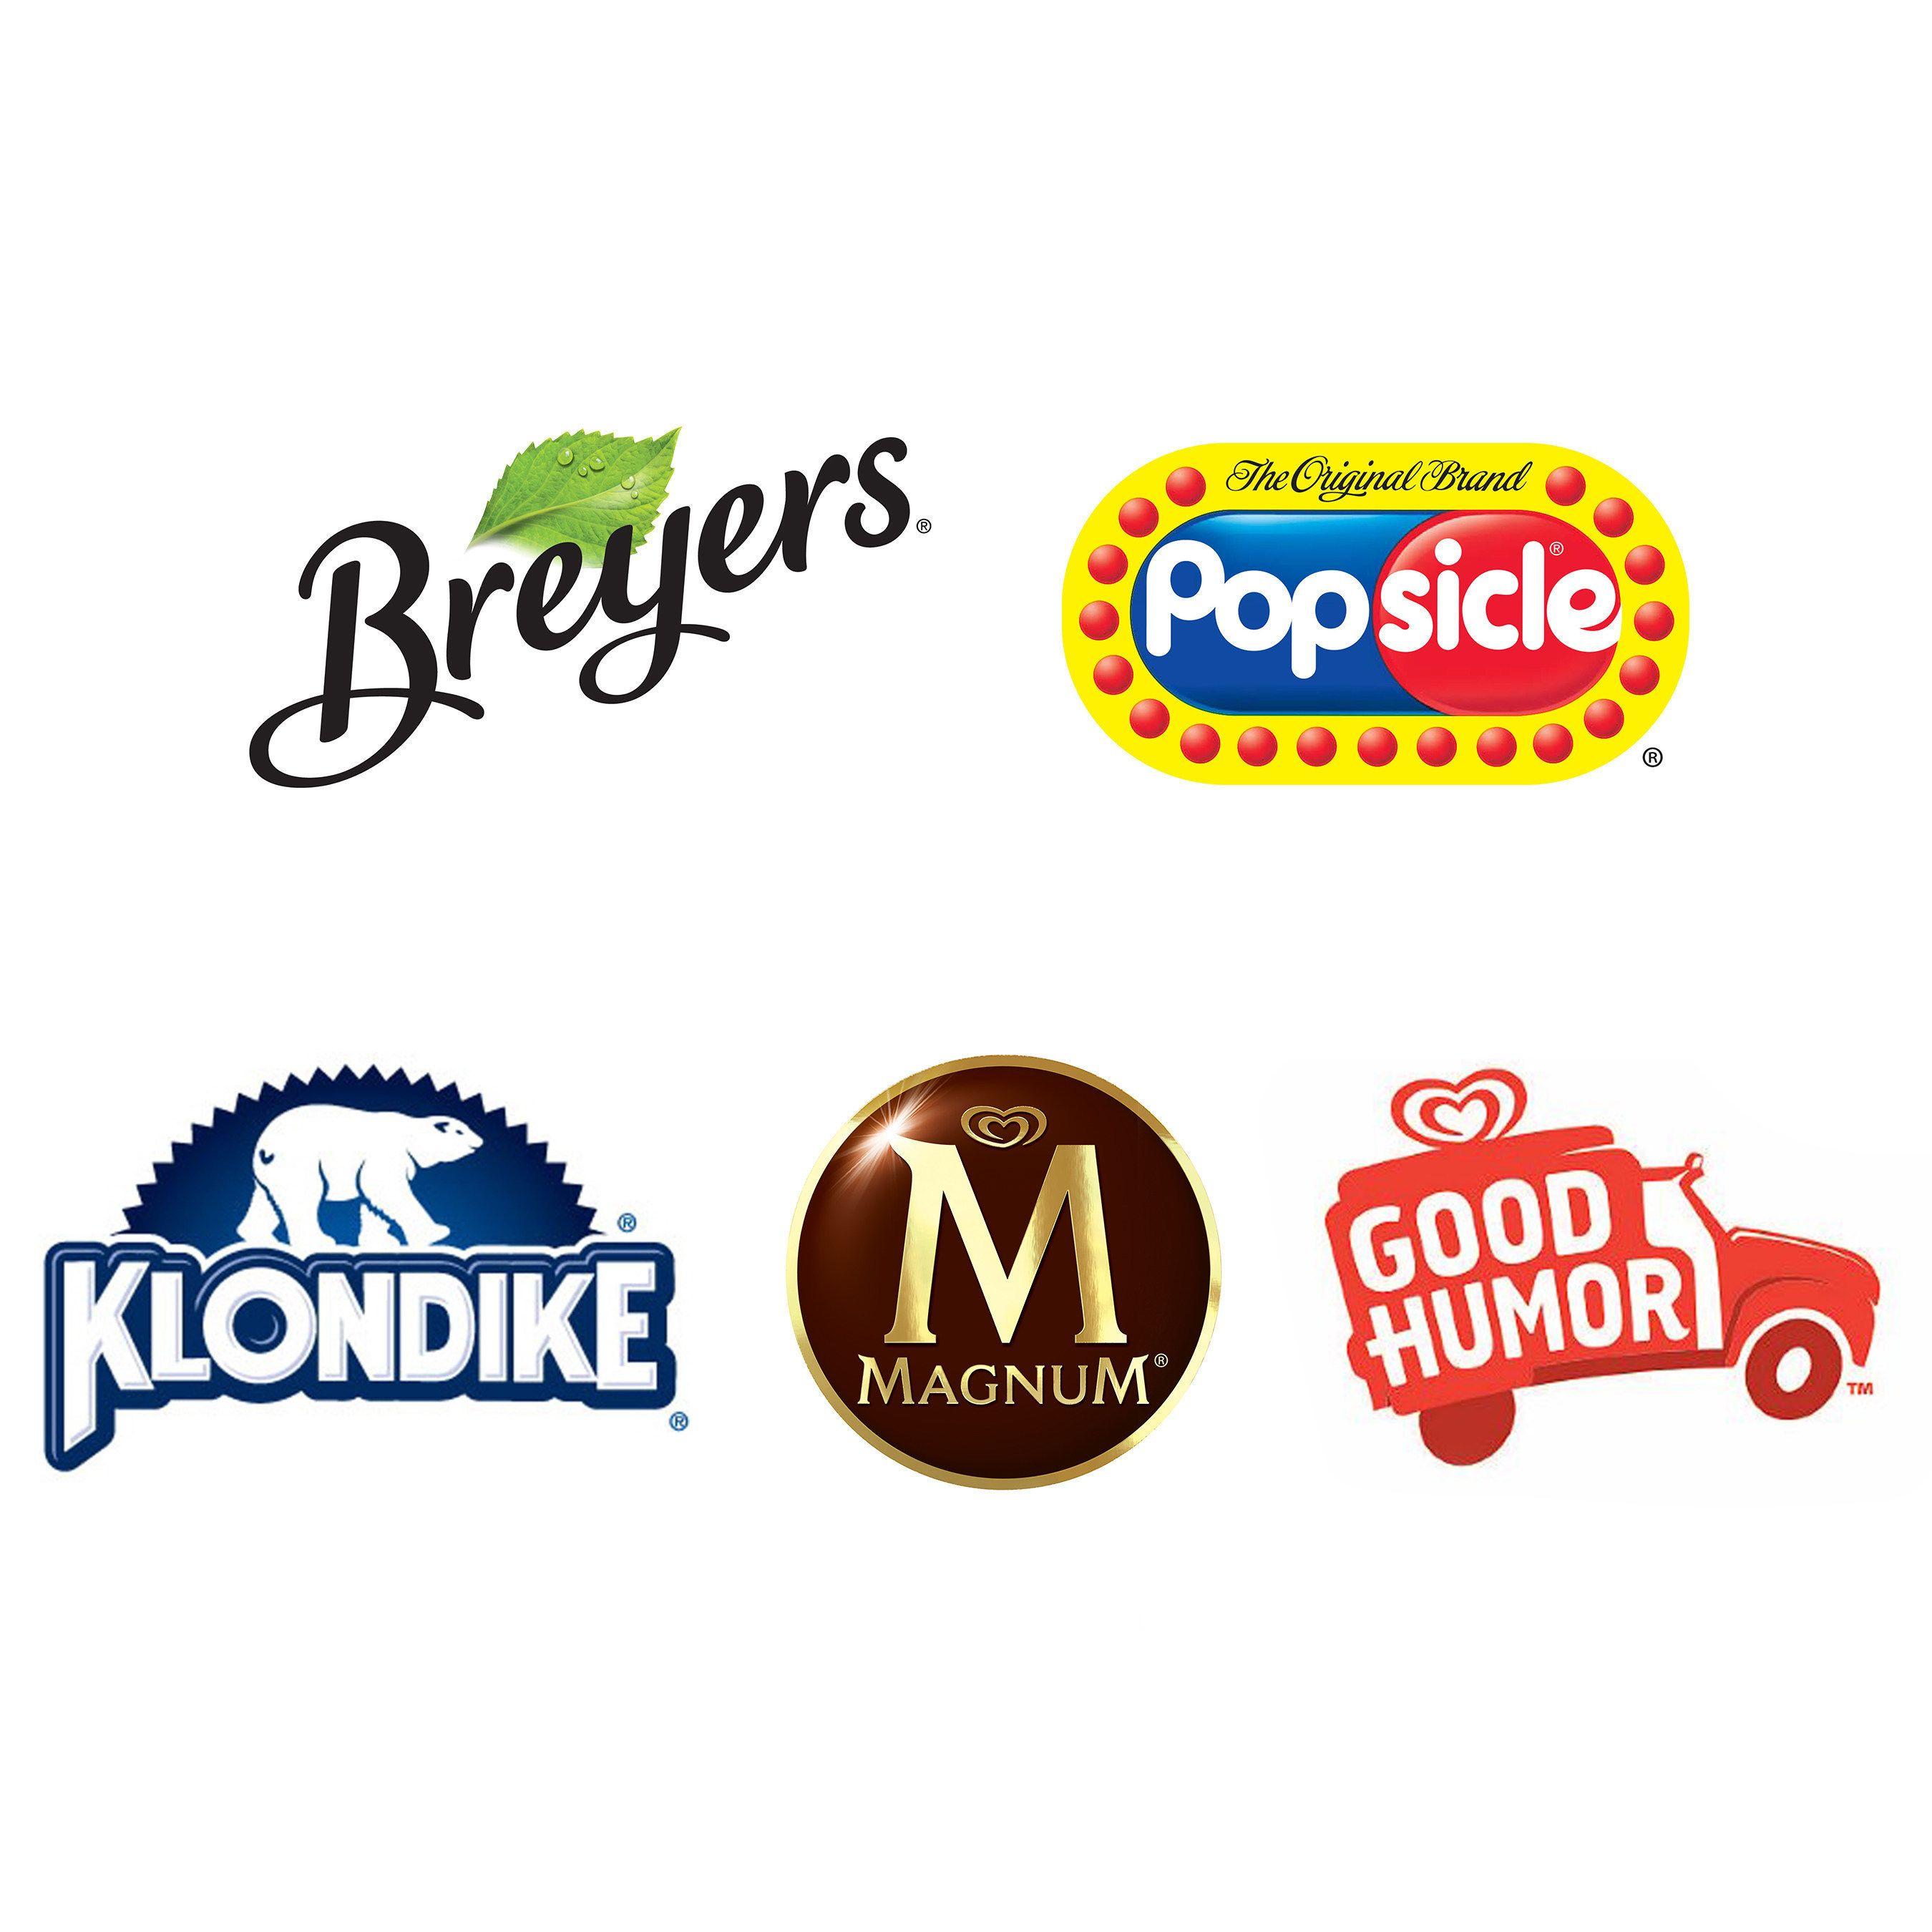 Breyers Ice Cream Logo - Get the Scoop! Unilever Ice Cream Introduces New Frozen Treats ...